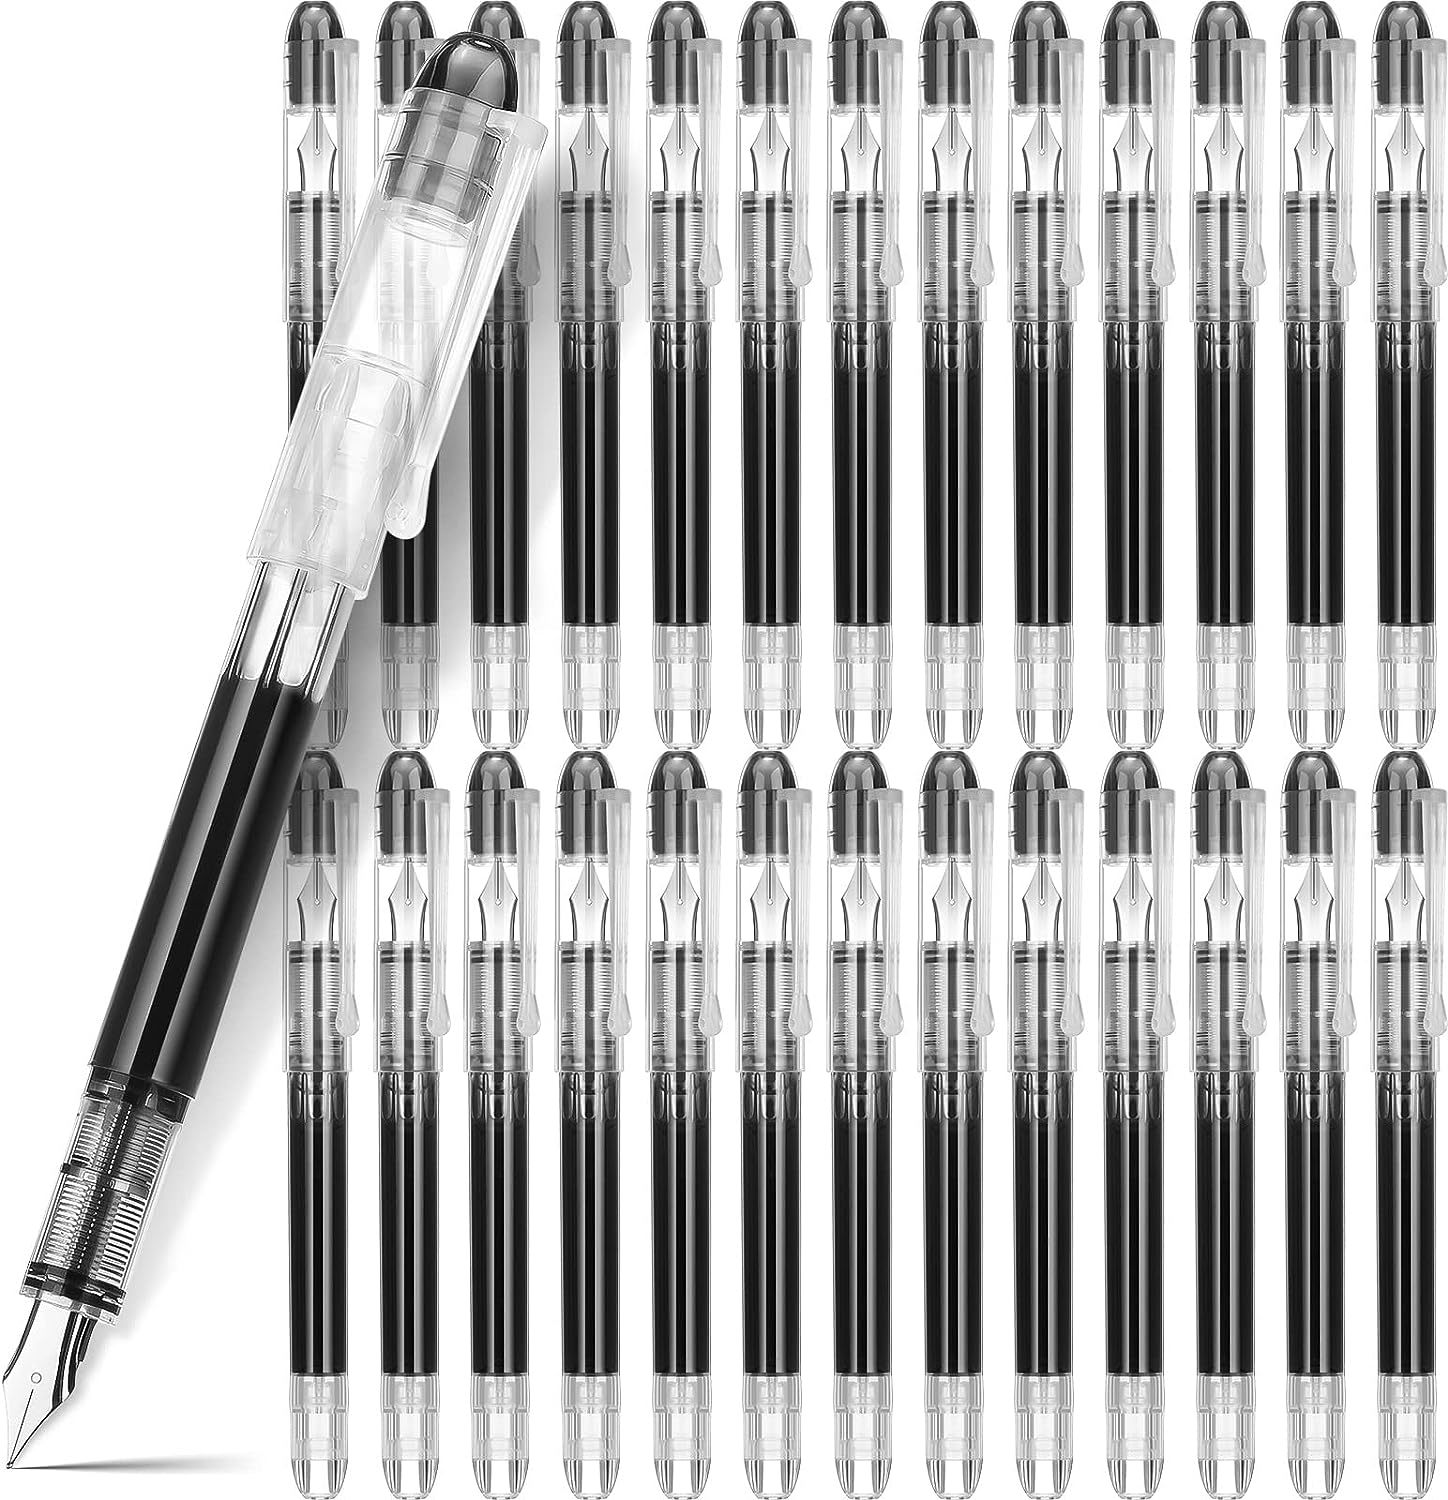 Erasable Gel Ink Stick Pens, Fine Point, 16-Pack, Pilot FriXion ColorSticks